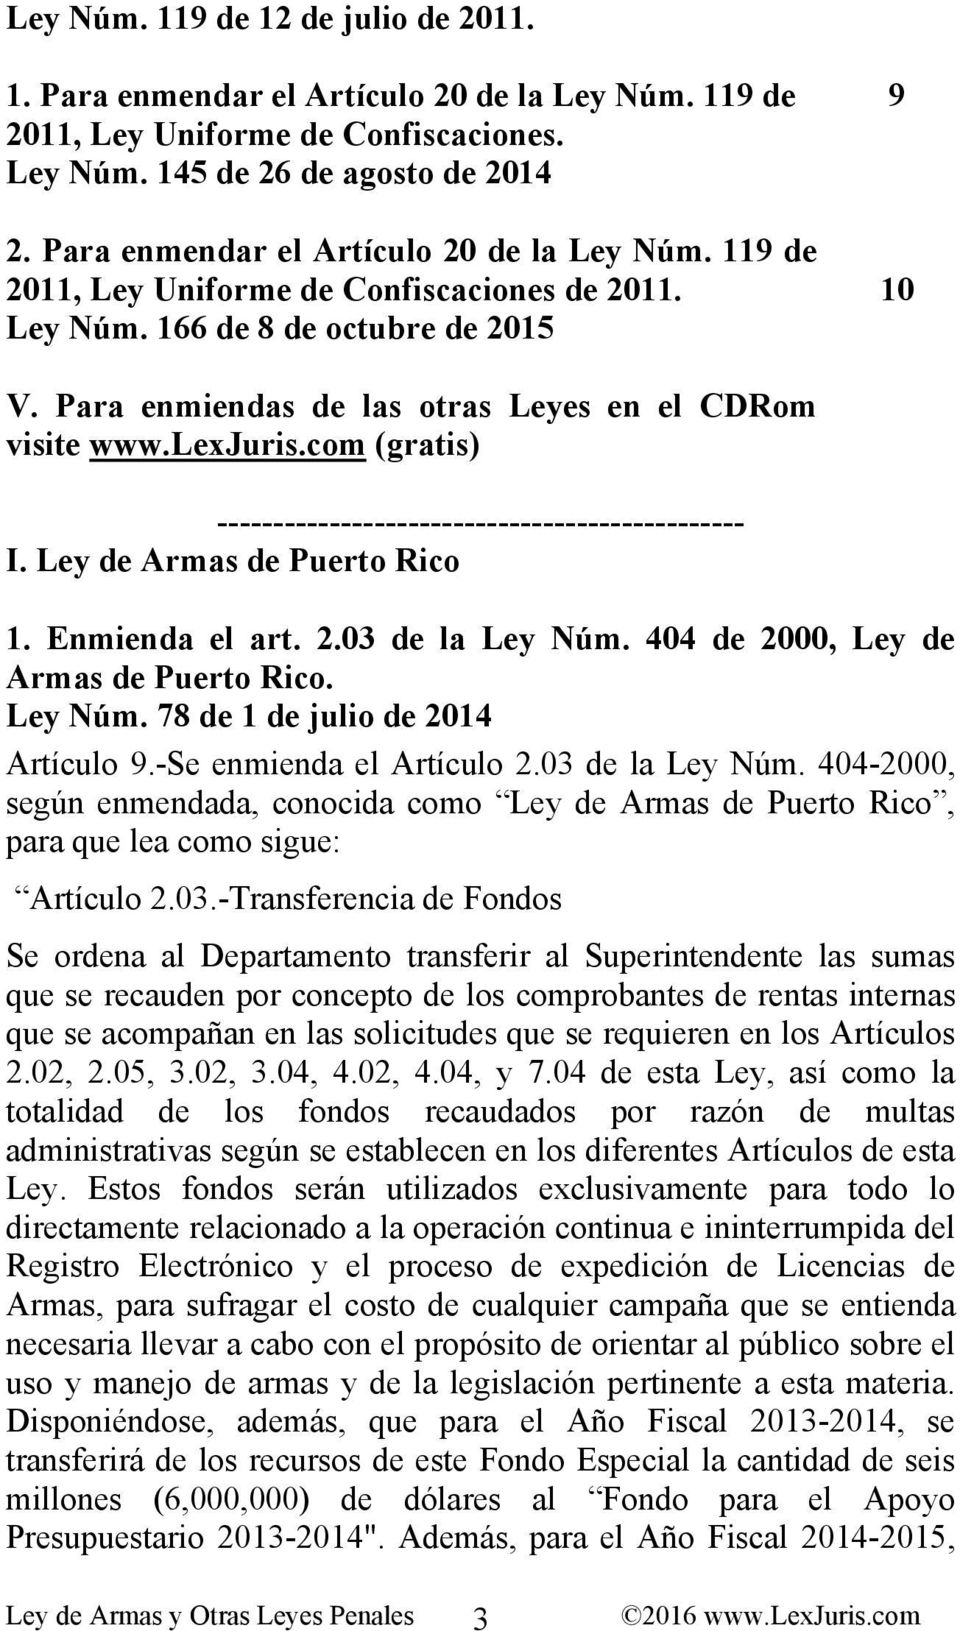 lexjuris.com (gratis) ----------------------------------------------- I. Ley de Armas de Puerto Rico 1. Enmienda el art. 2.03 de la Ley Núm. 404 de 2000, Ley de Armas de Puerto Rico. Ley Núm. 78 de 1 de julio de 2014 Artículo 9.